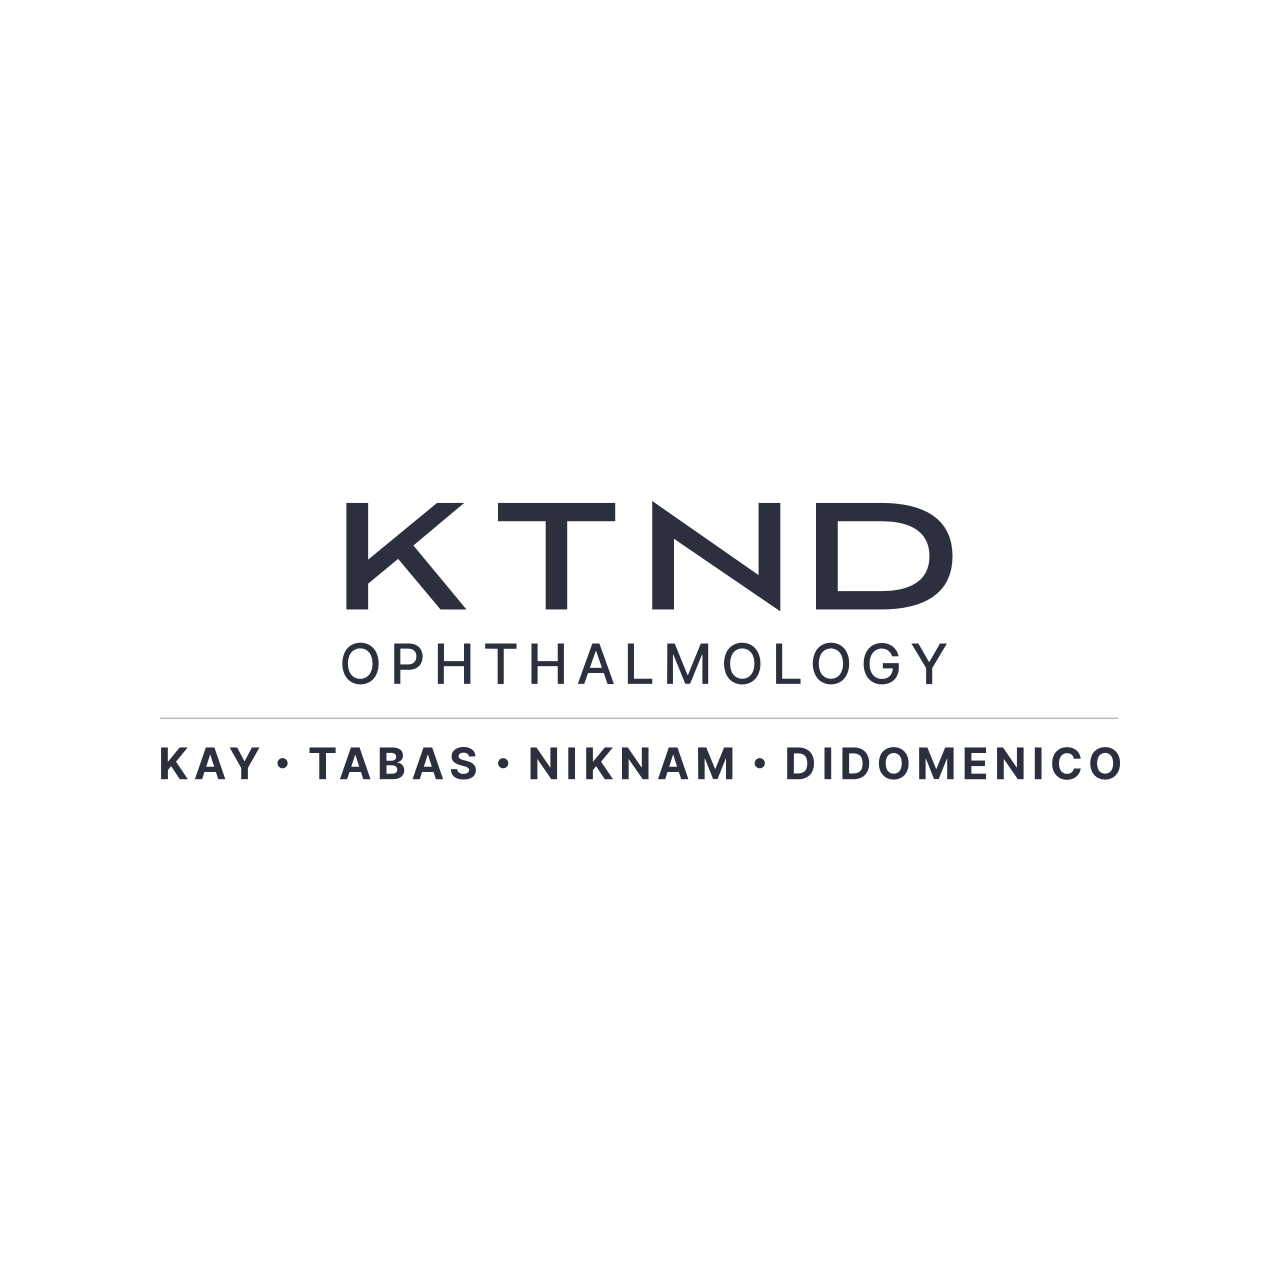 KTND Ophthalmology